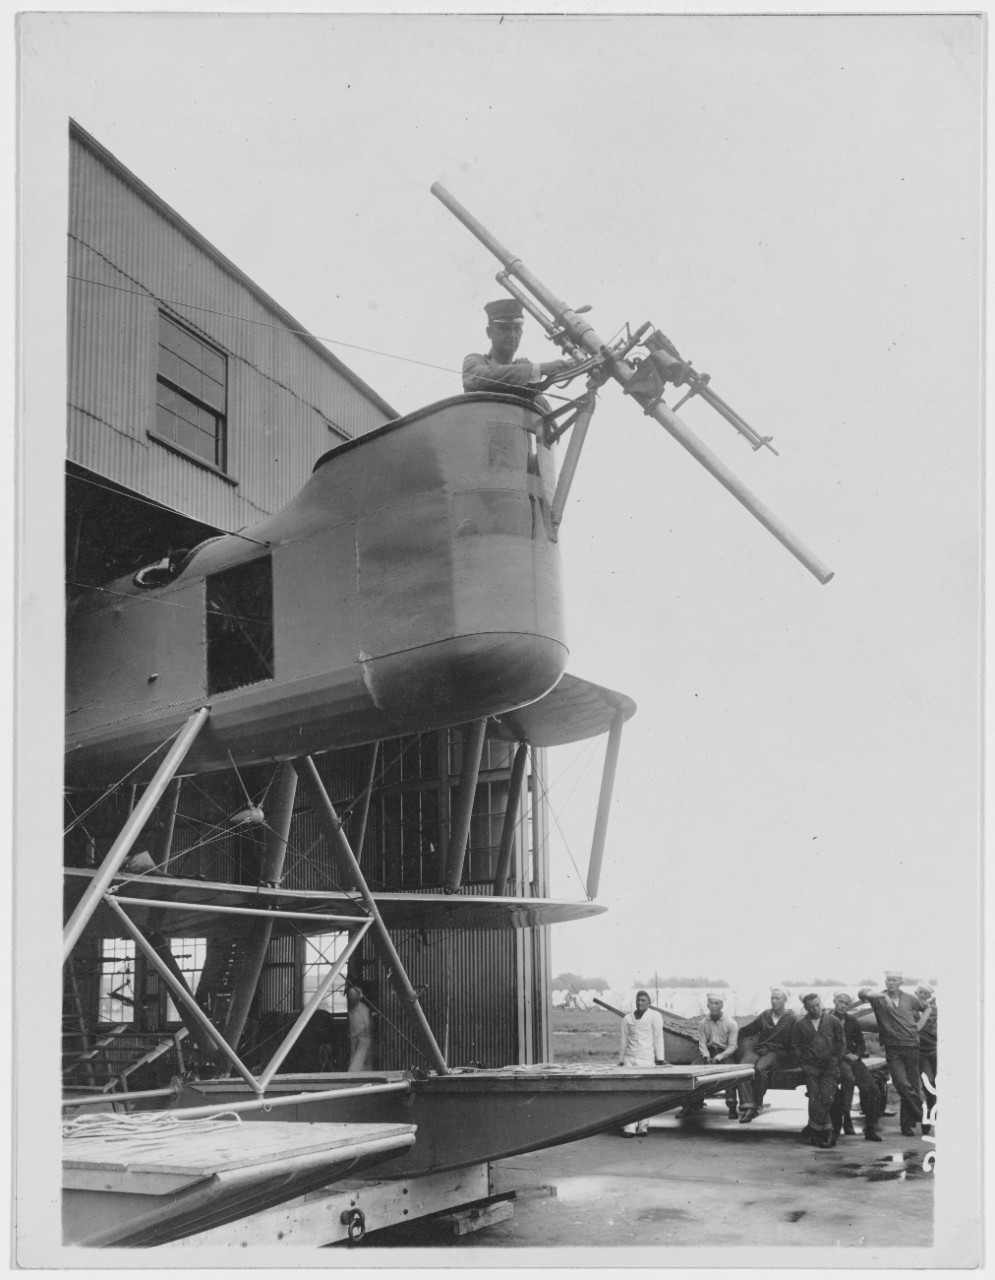 Naval Aircraft Factory N-1 seaplane